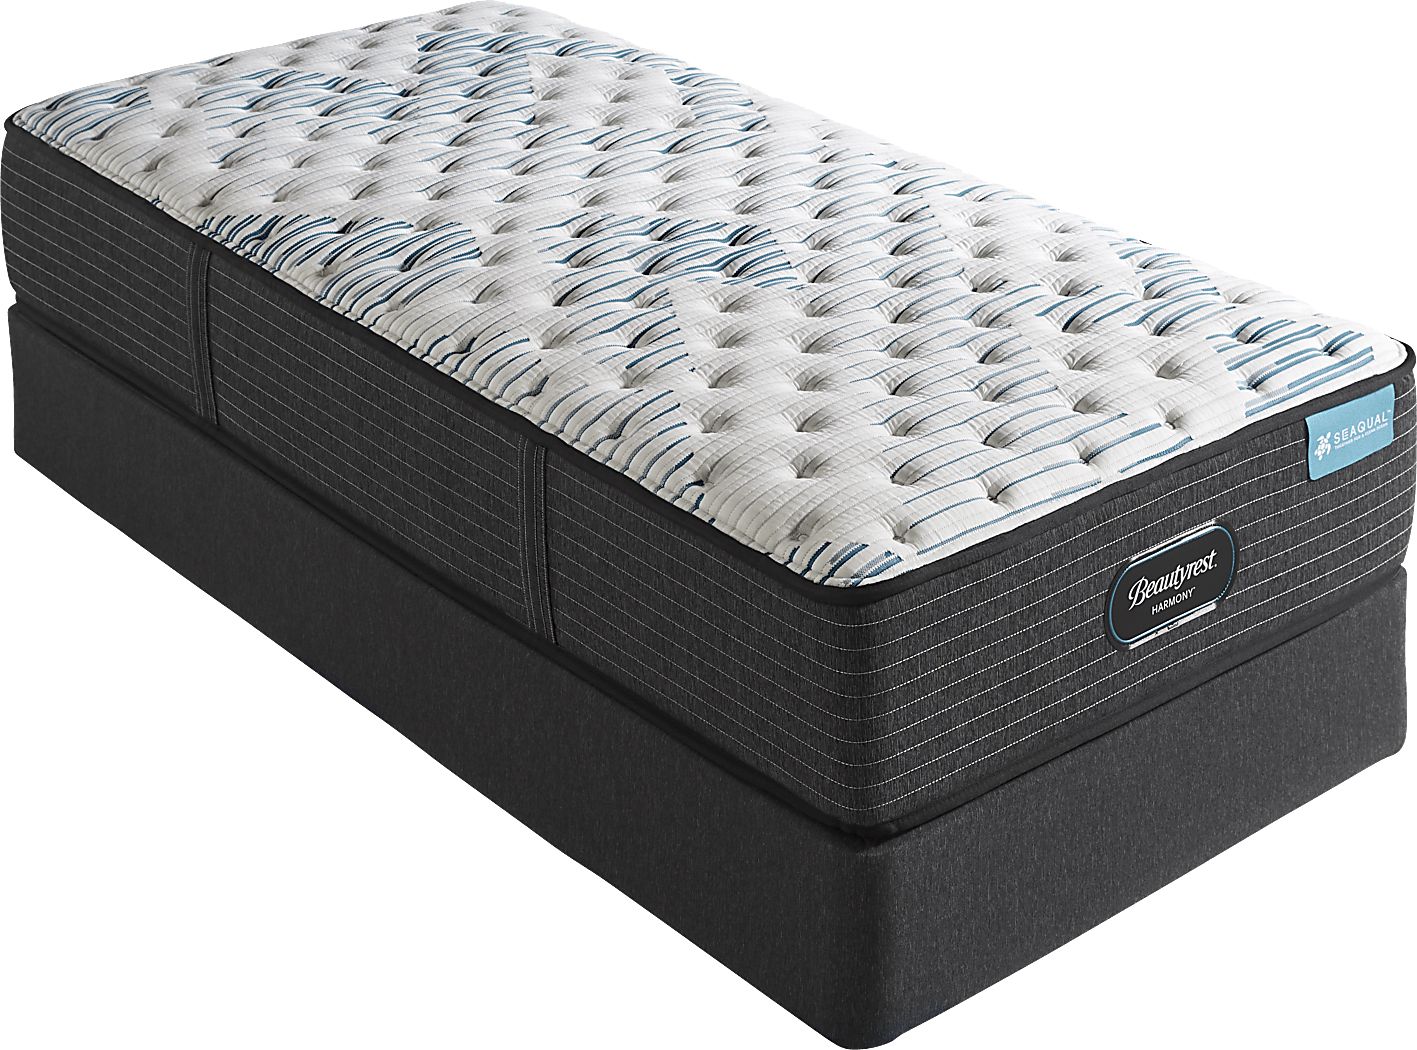 mattress beautyrest mcneil ptlxfm kg white one size